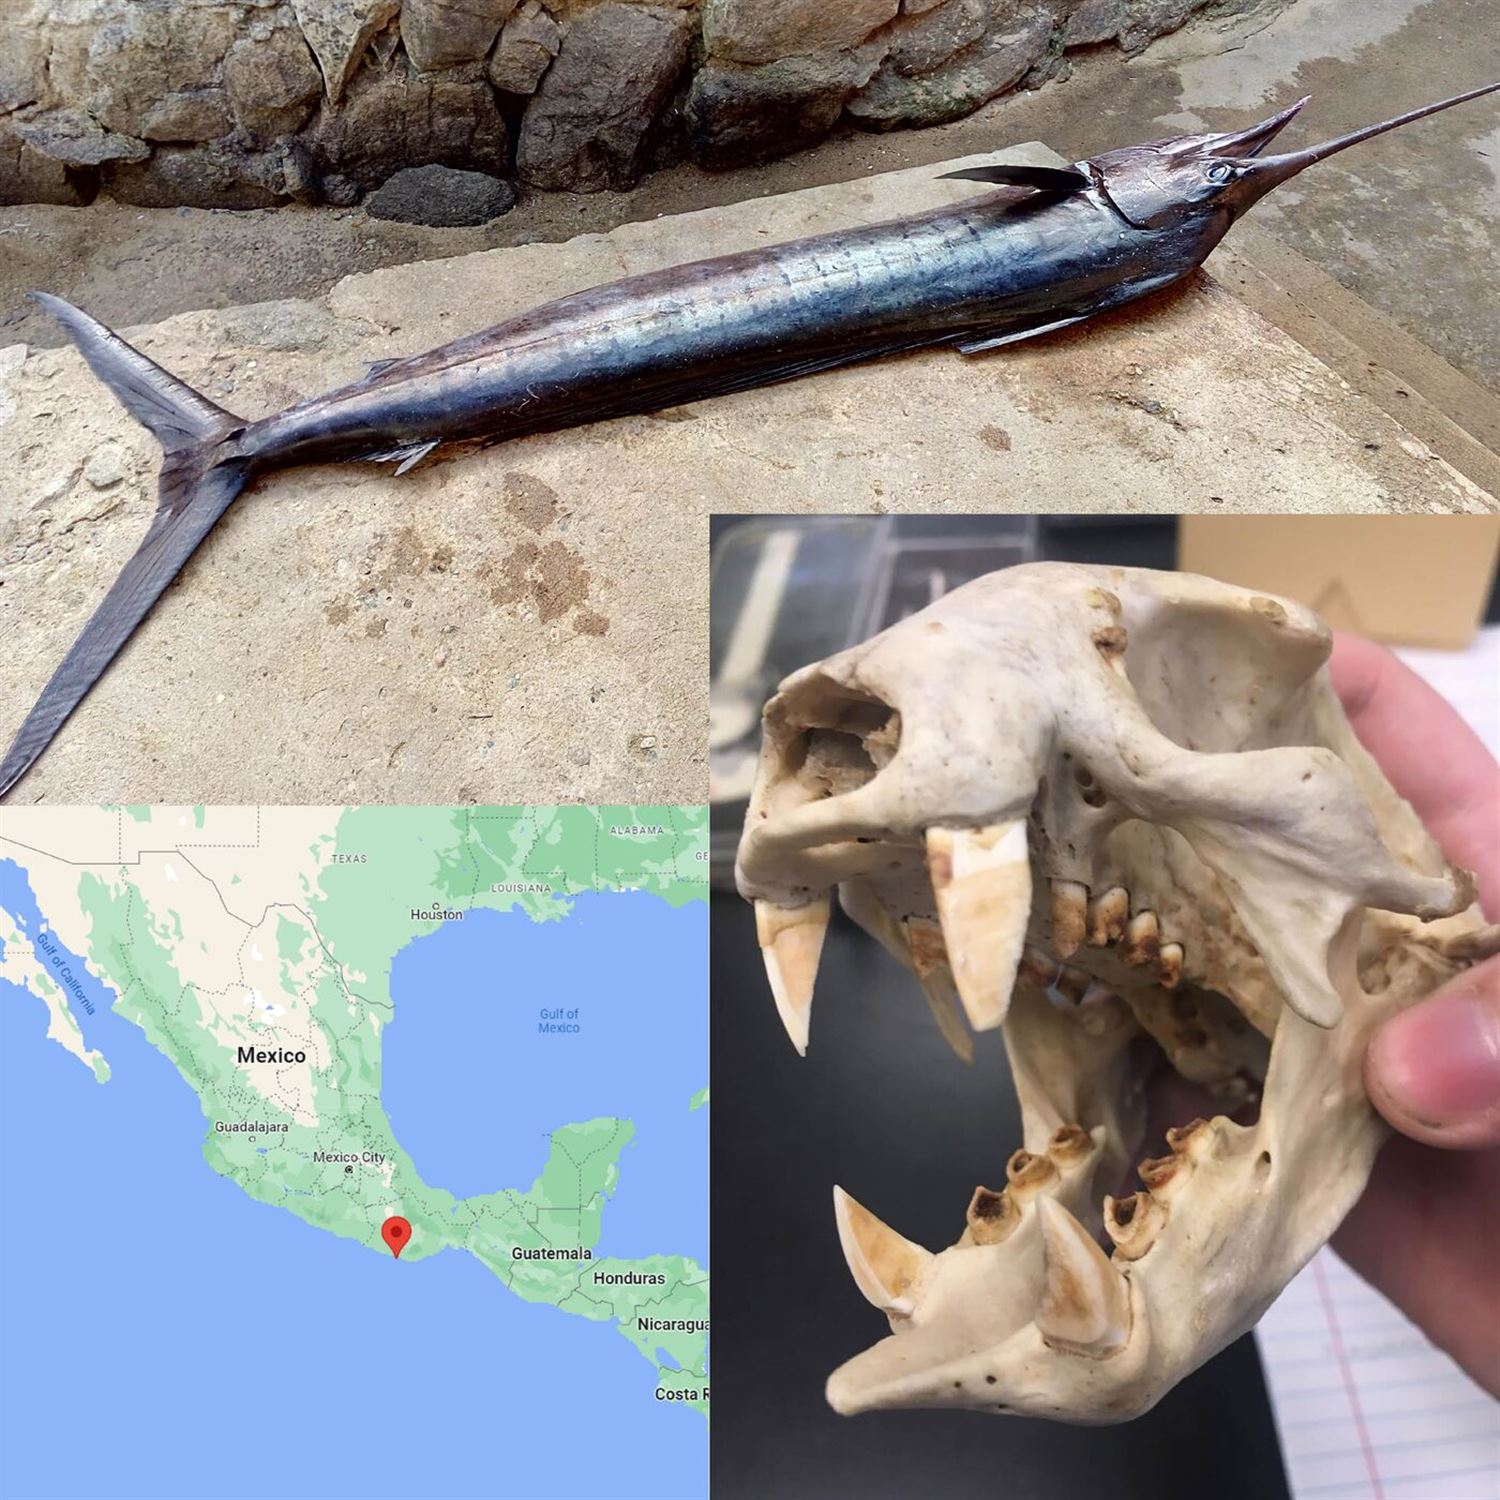 Marlins, sloth teeth and missing biology